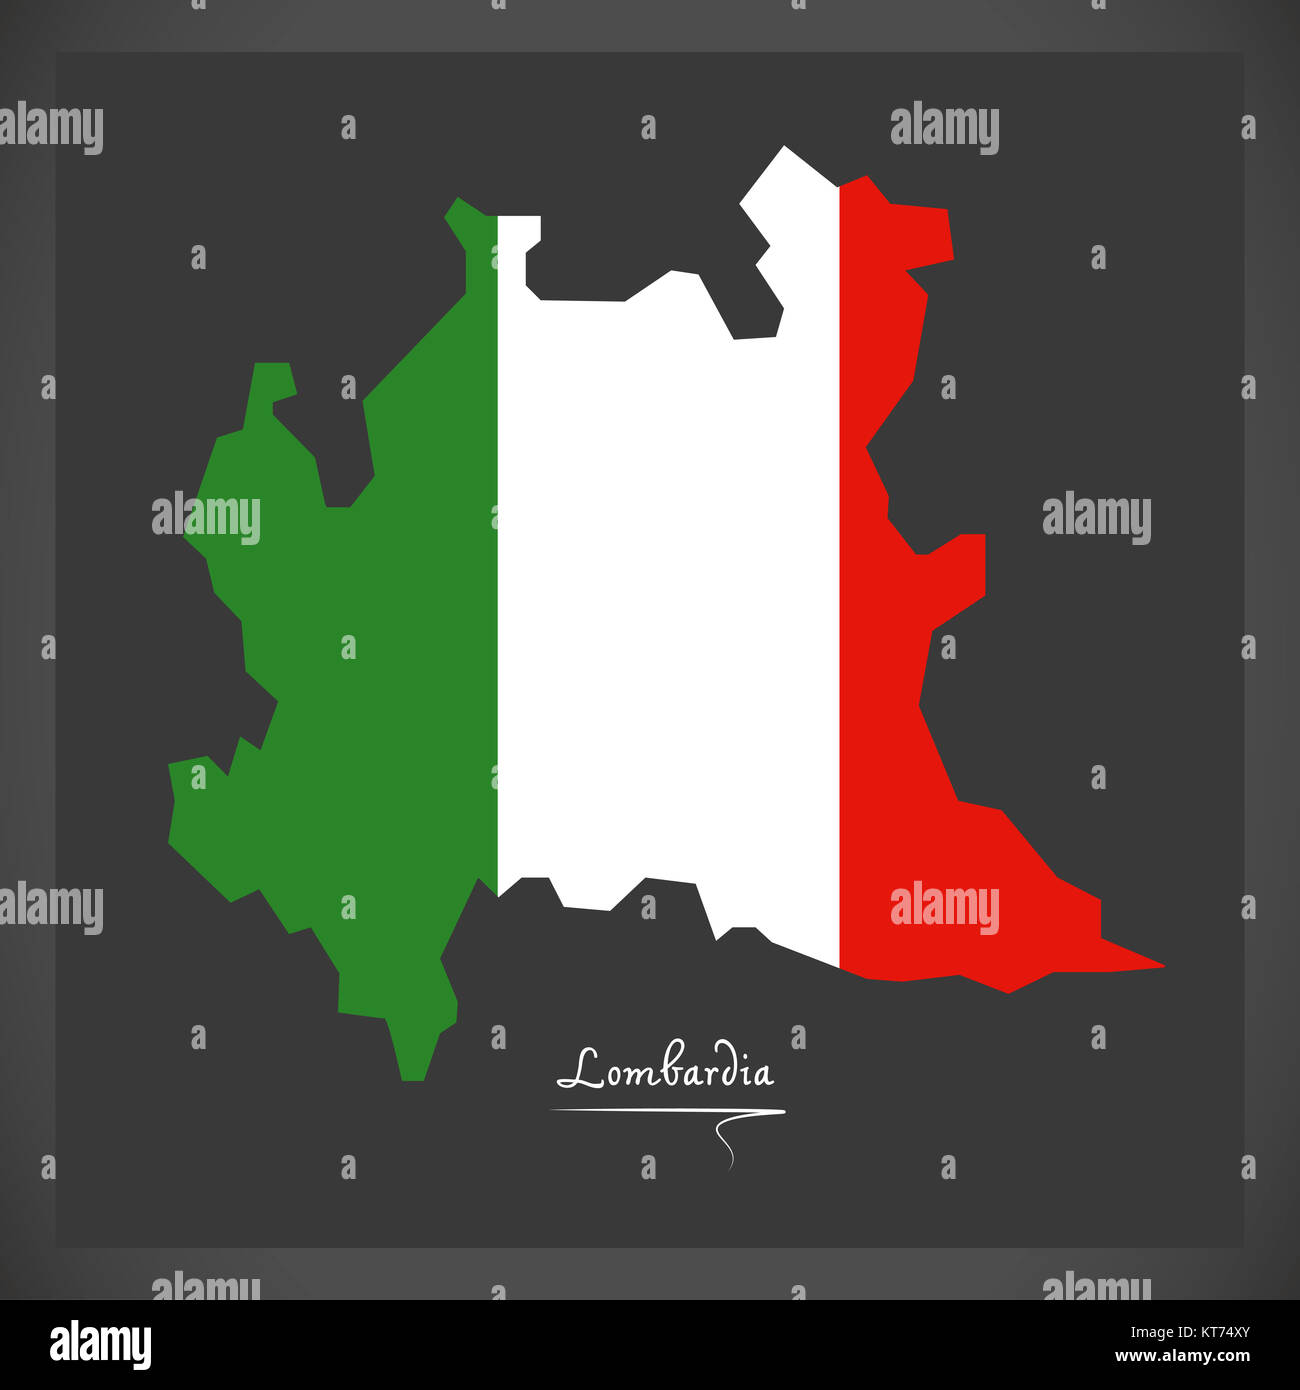 Lombardia map with Italian national flag illustration Stock Photo